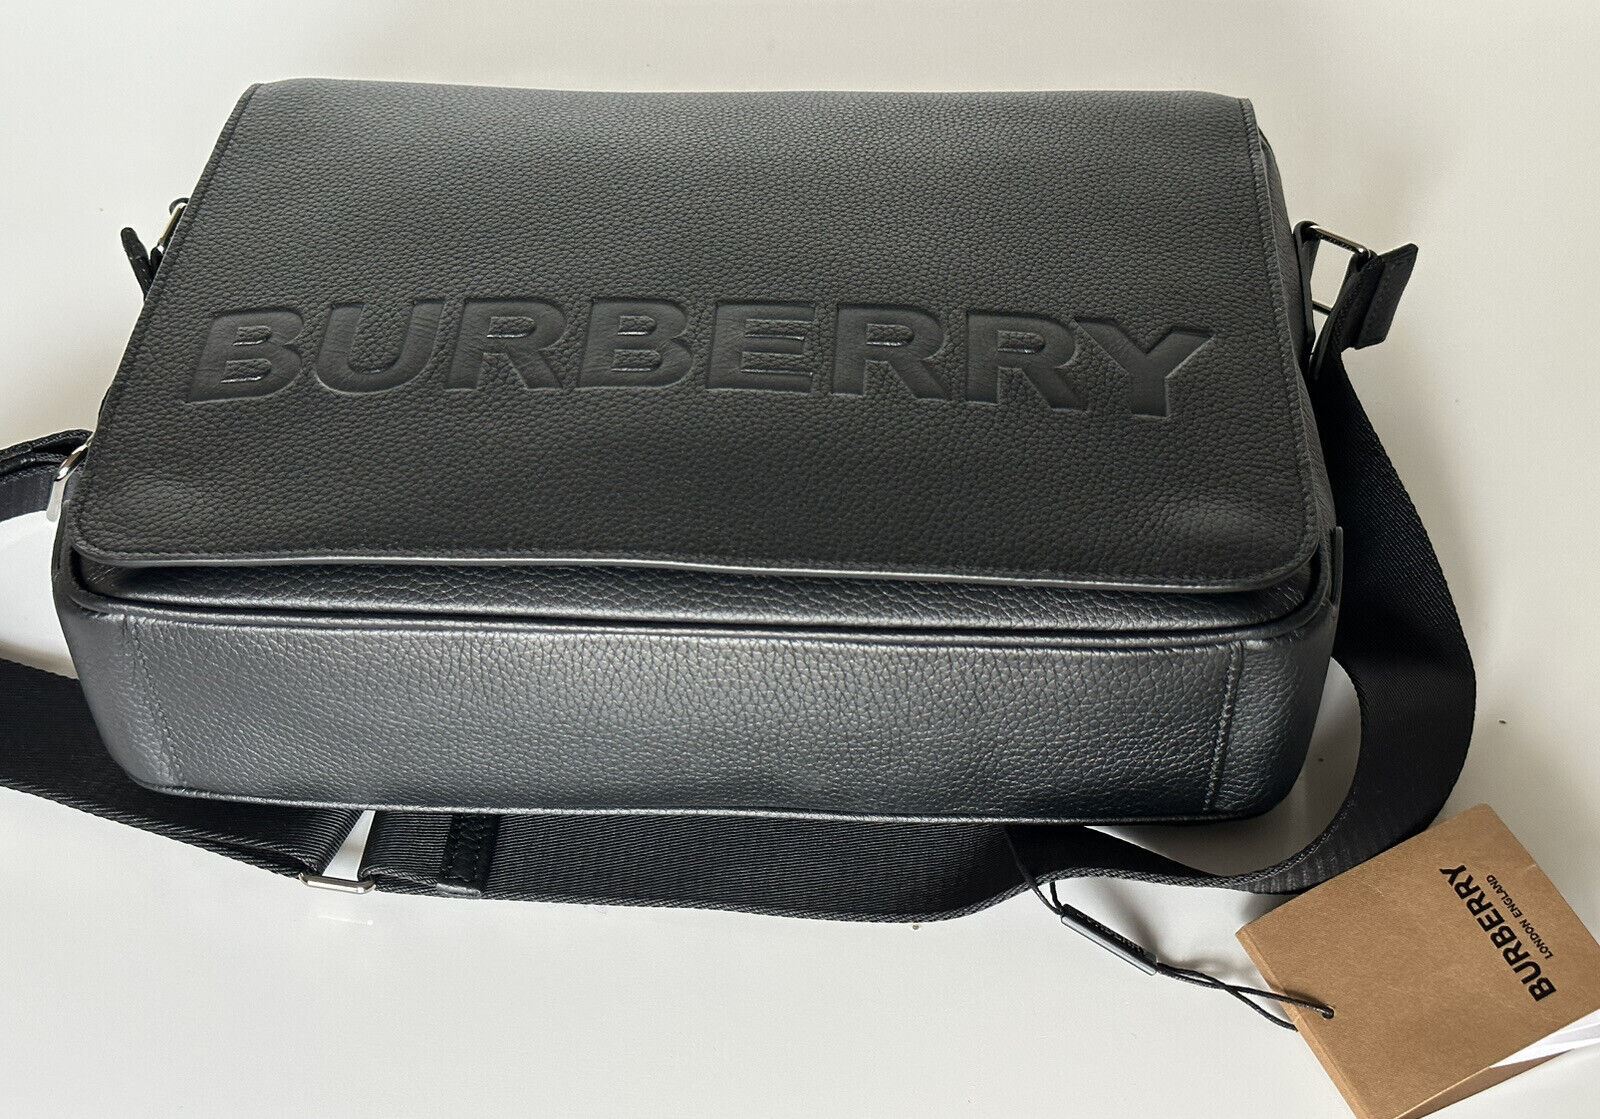 NWT $1350 Burberry Bruno Кожаная сумка-мессенджер с логотипом Темно-серого цвета 80507621 